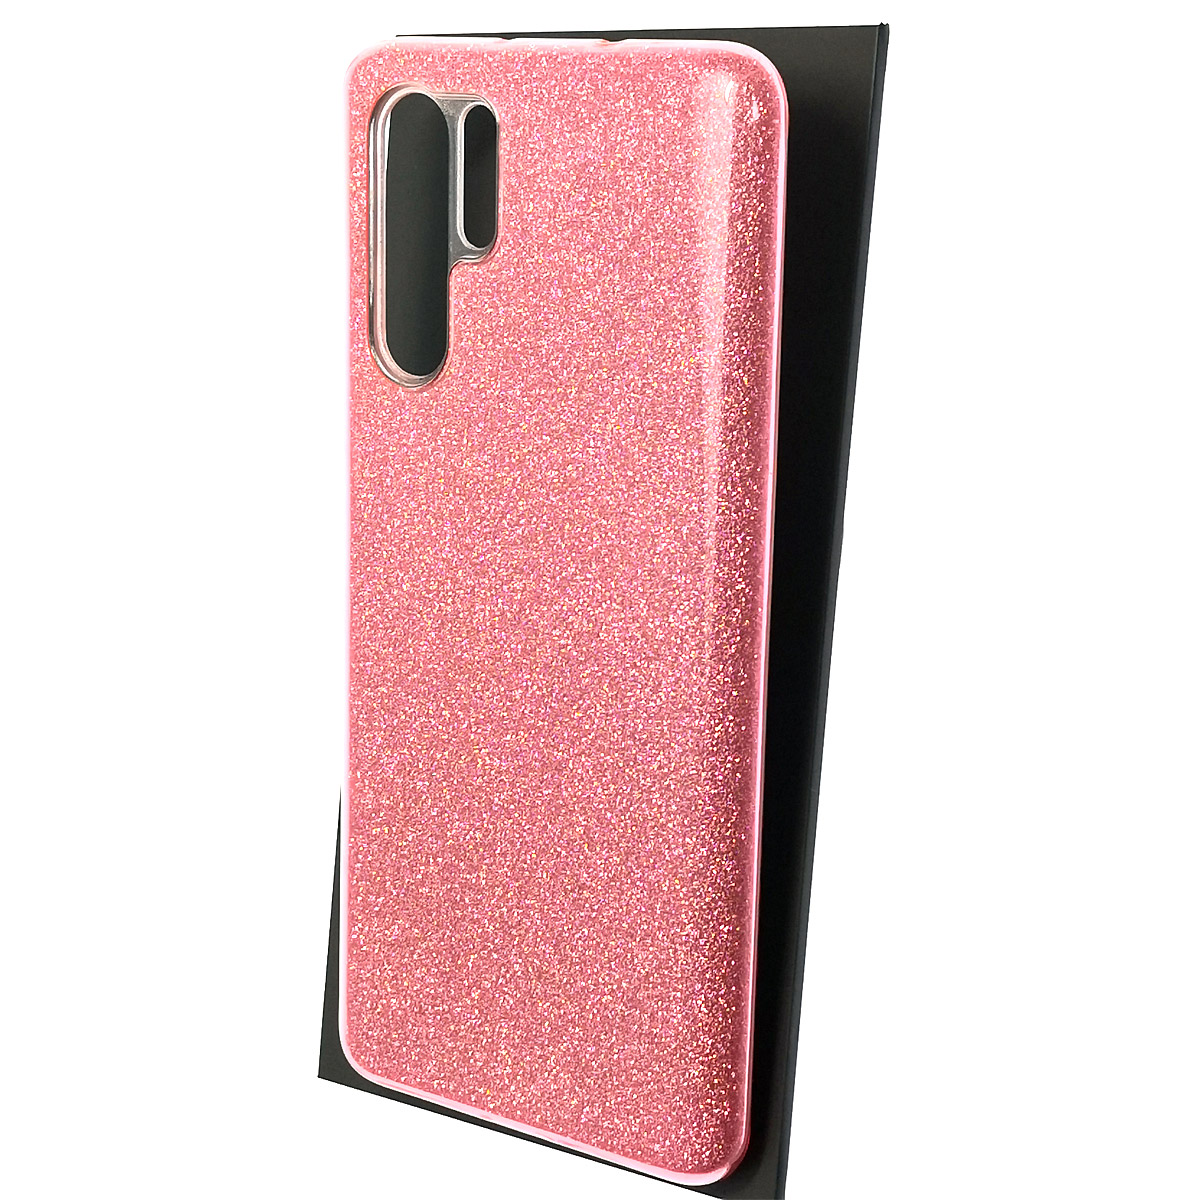 Чехол накладка Shine для HUAWEI P30 Pro (VOG-L29), силикон, блестки, цвет розовый